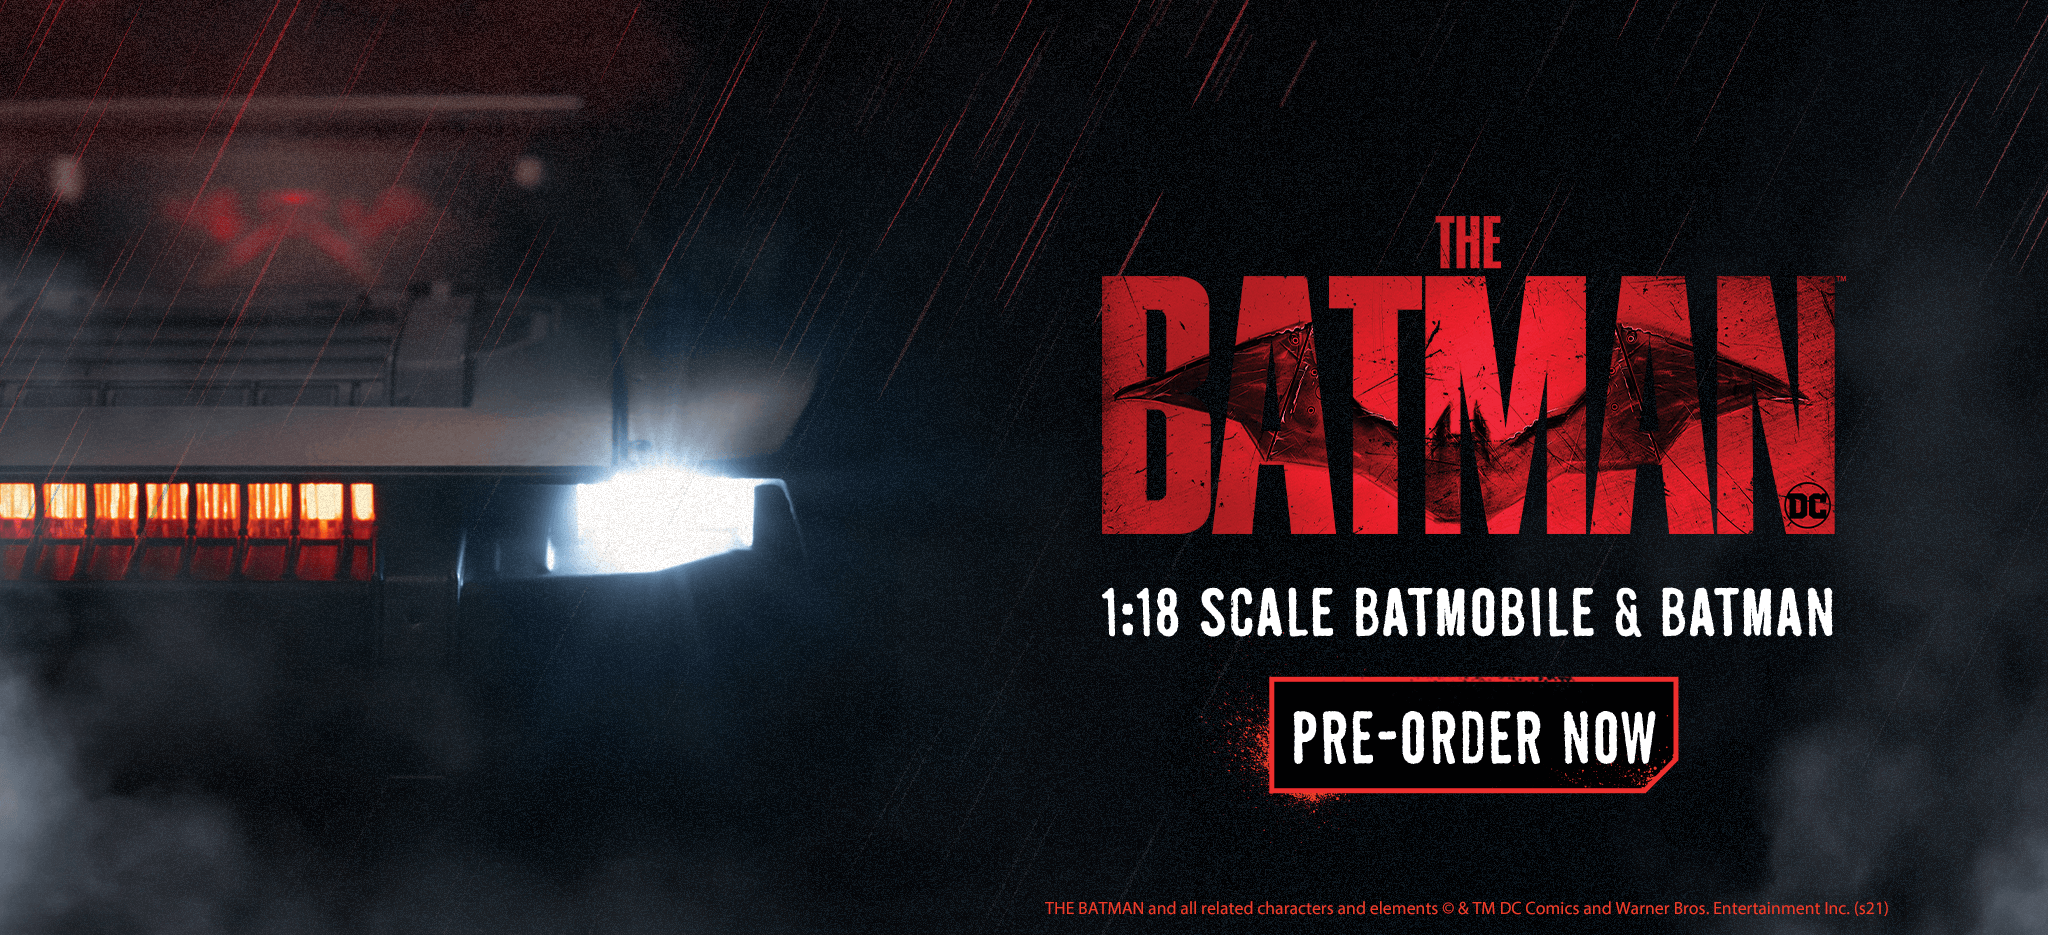 The Batman 1:18 Batmobile: Pre-Order Now!